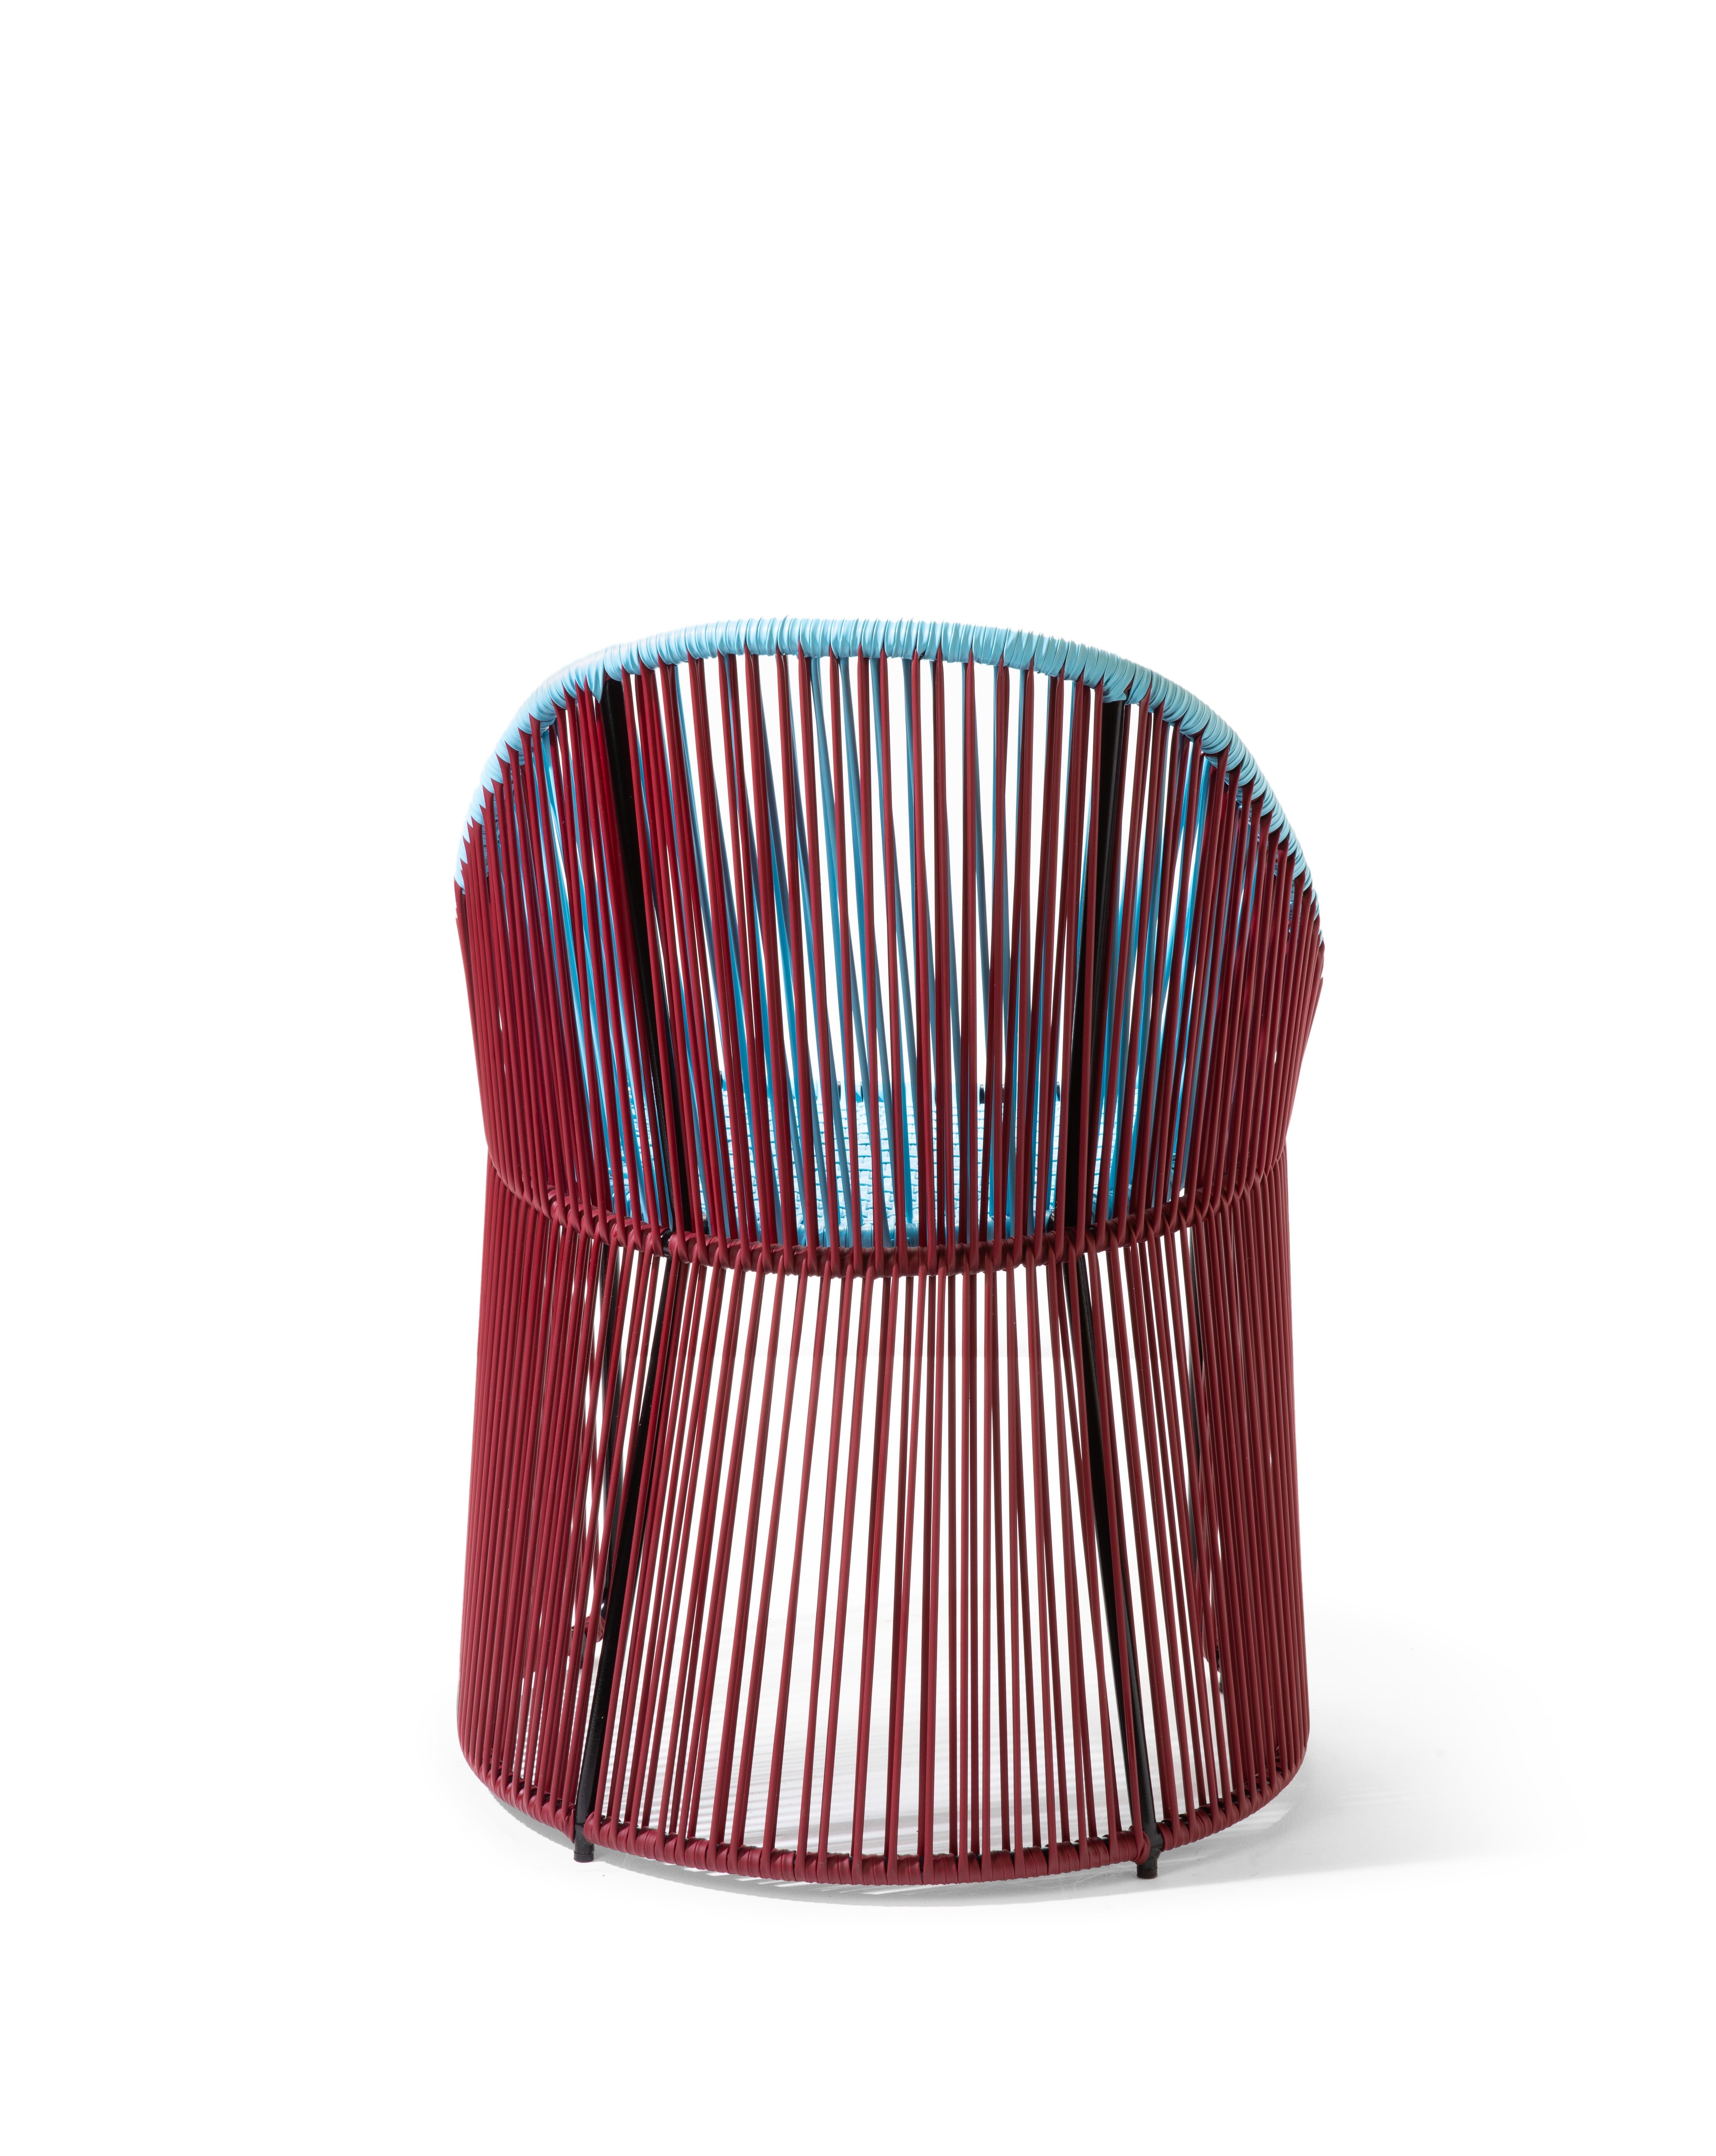 Powder-Coated Set of 4 Blue Cartagenas Dining Chair by Sebastian Herkner